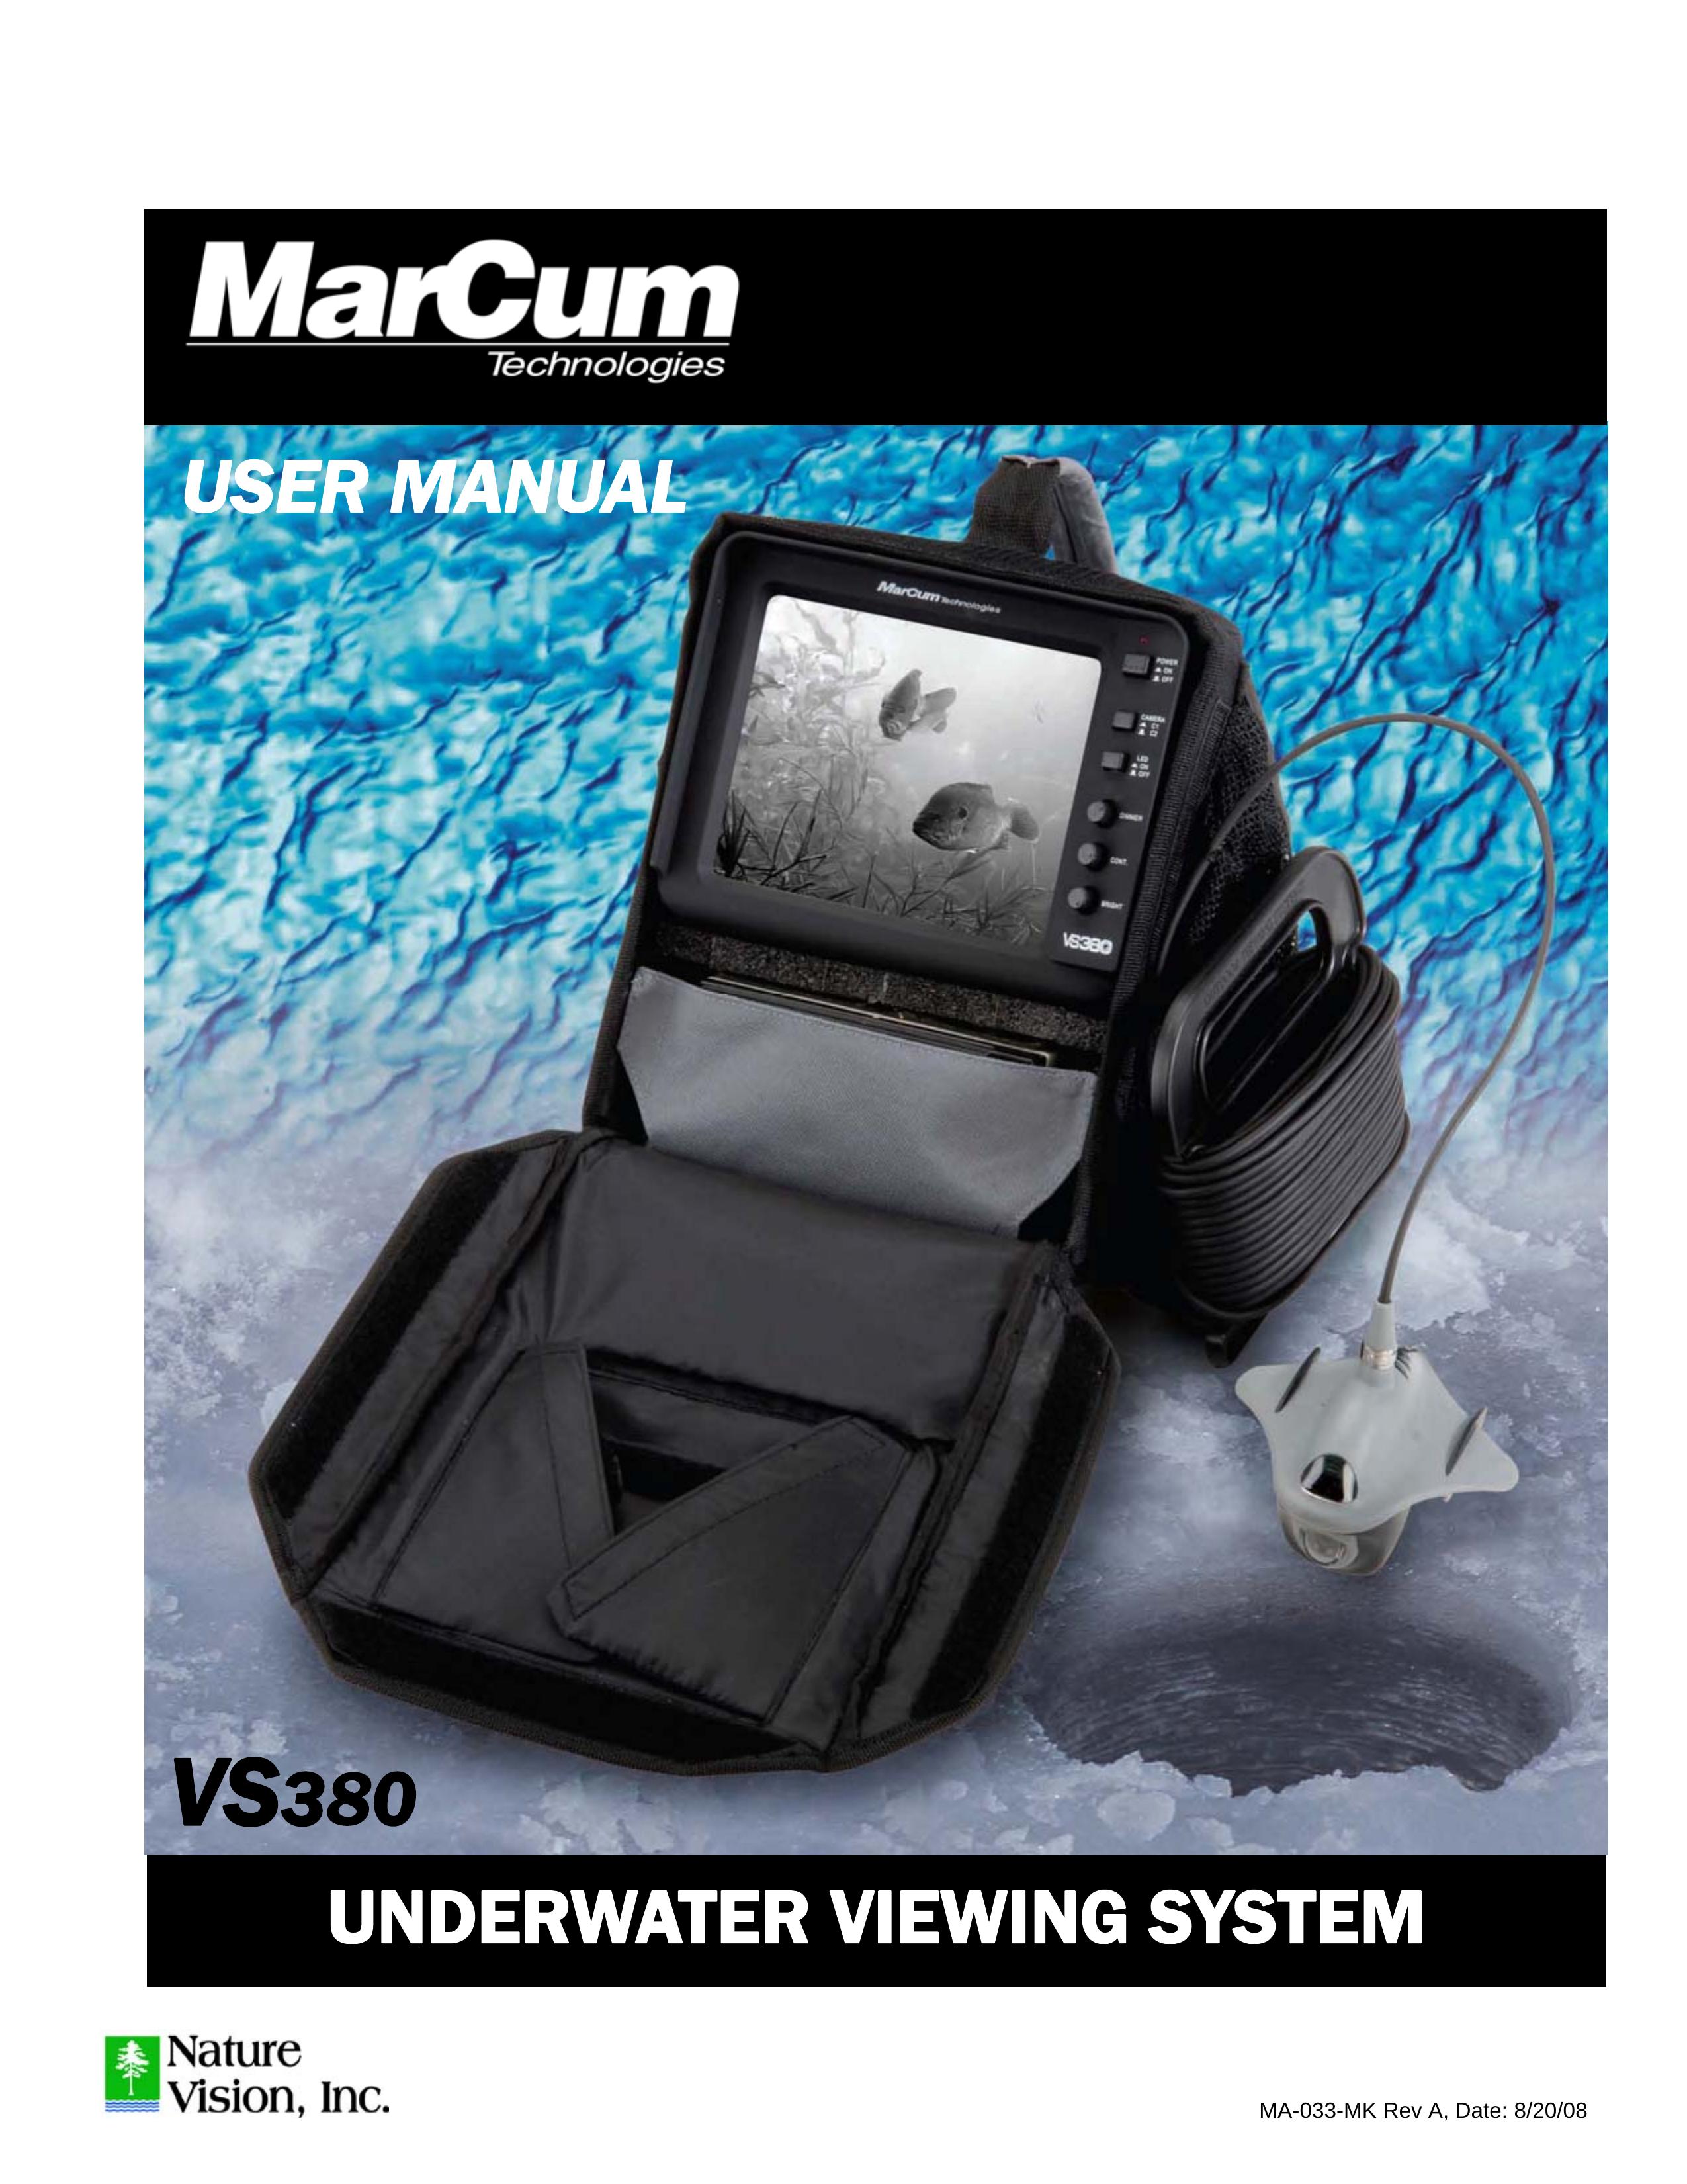 Marcum Technologies VS380 Film Camera User Manual